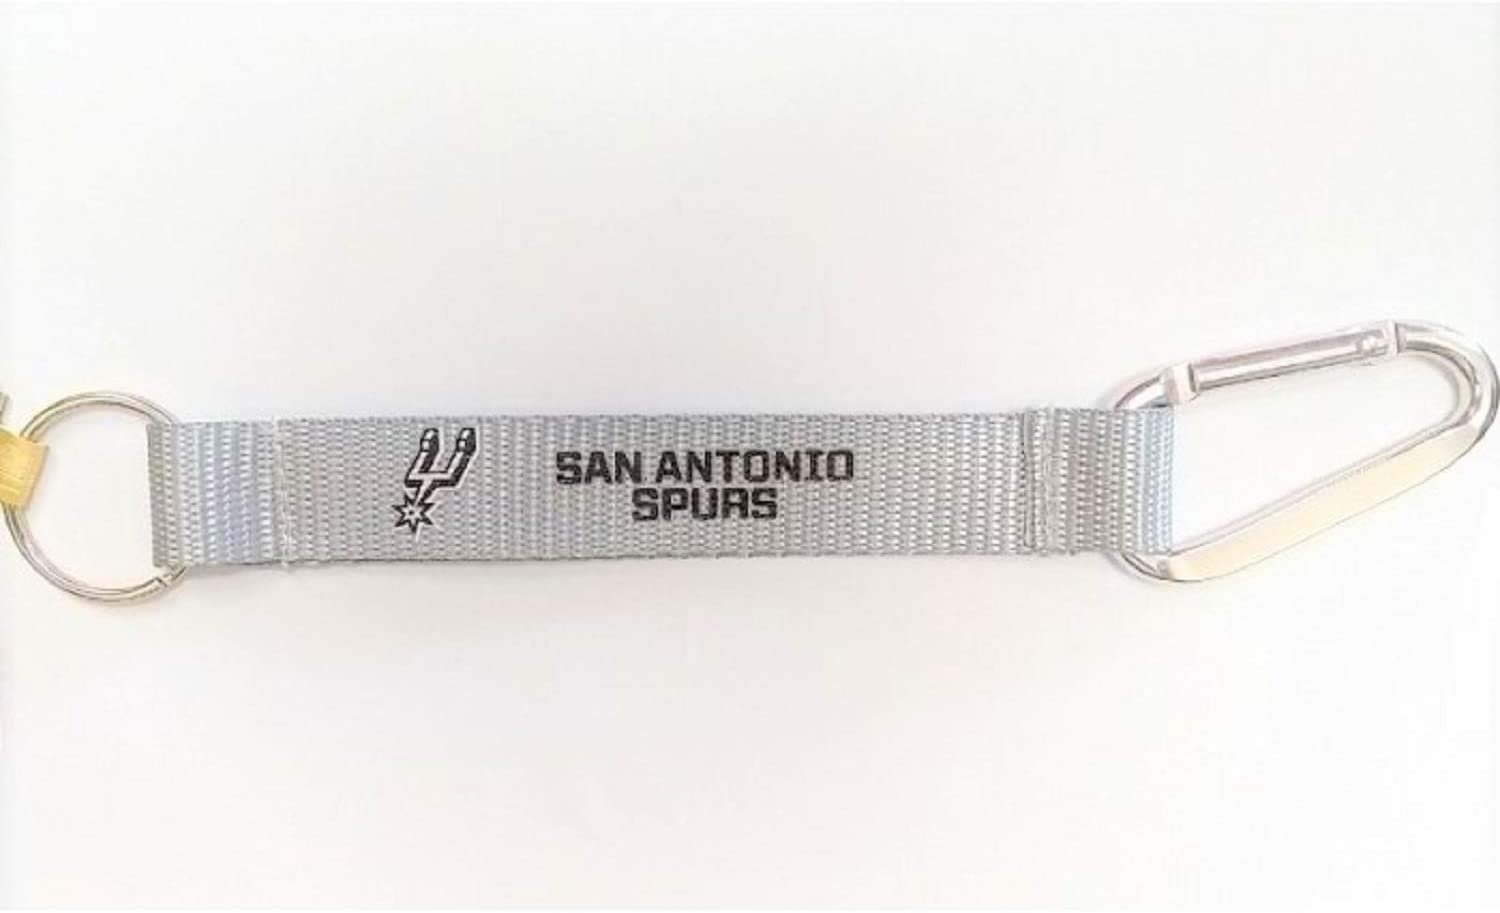 San Antonio Spurs Premium 2-Sided Carabiner Lanyard Keychain with Key Ring